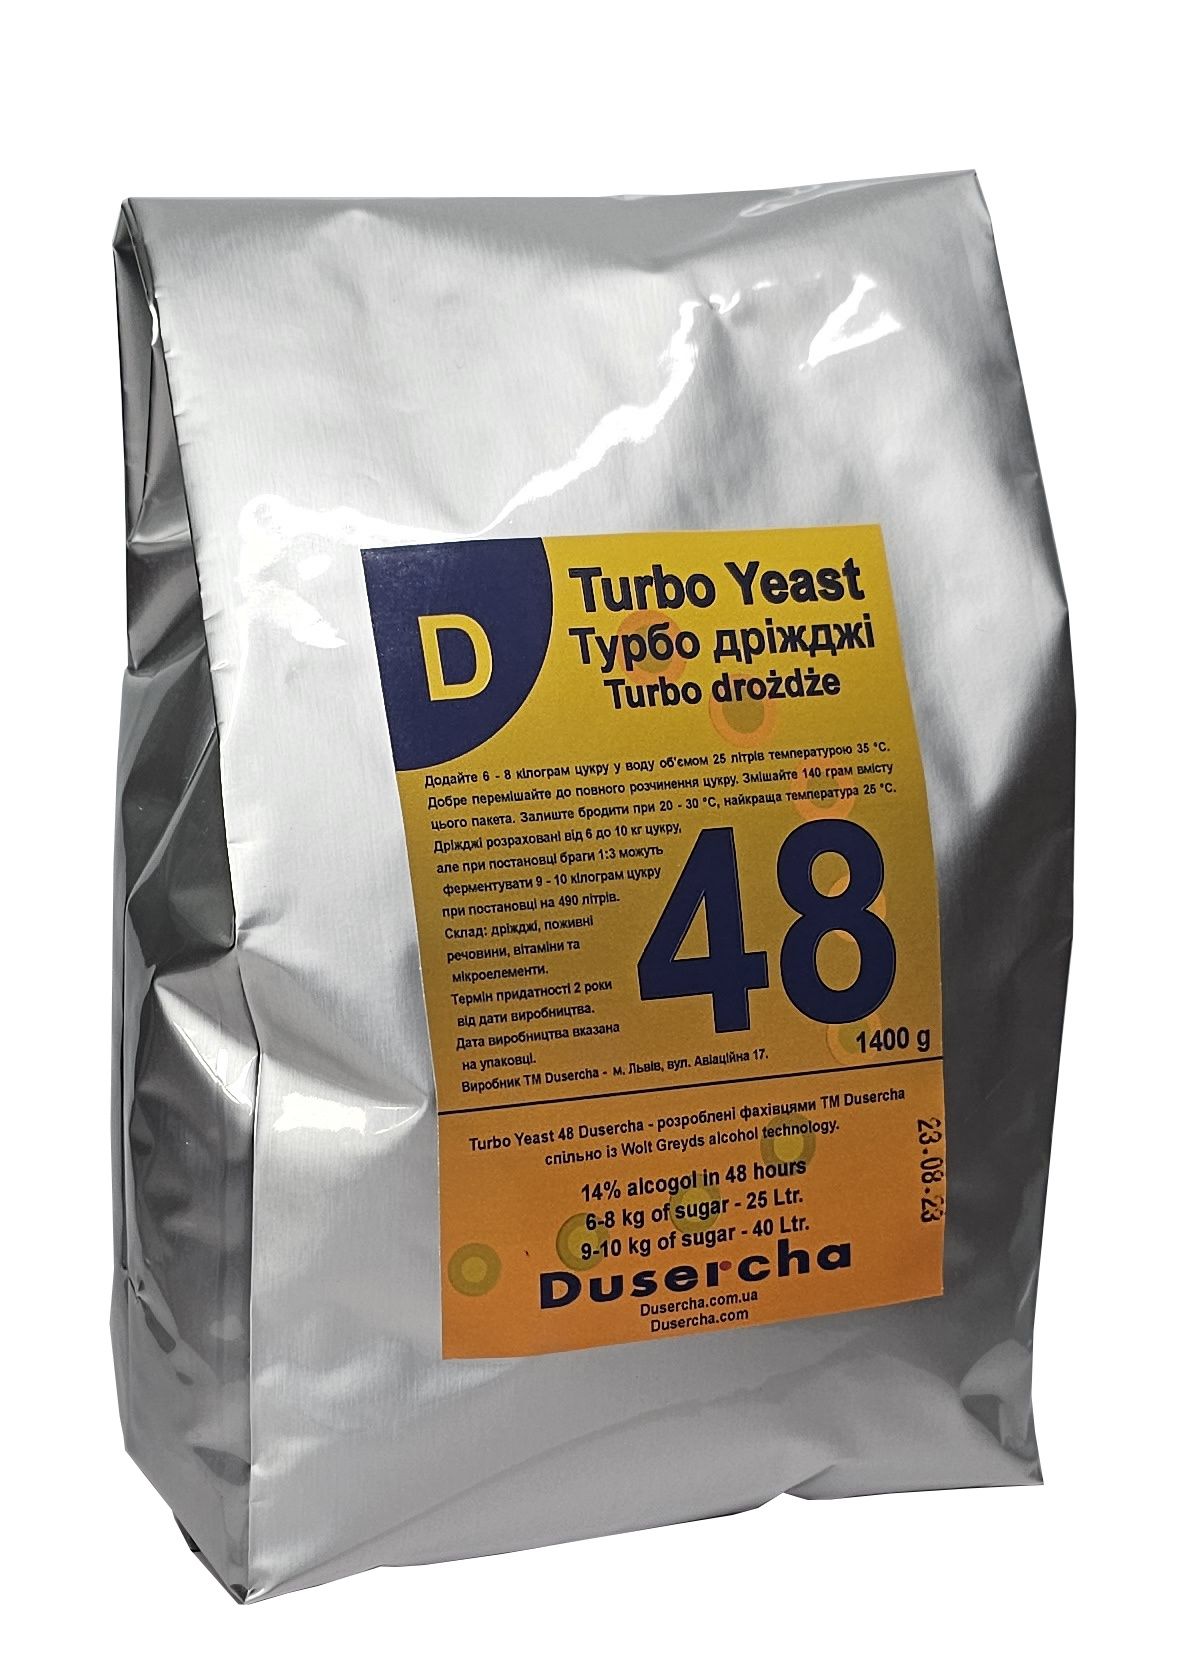 Спиртовые турбо дрожжи Dusercha 48 (1400 грам)